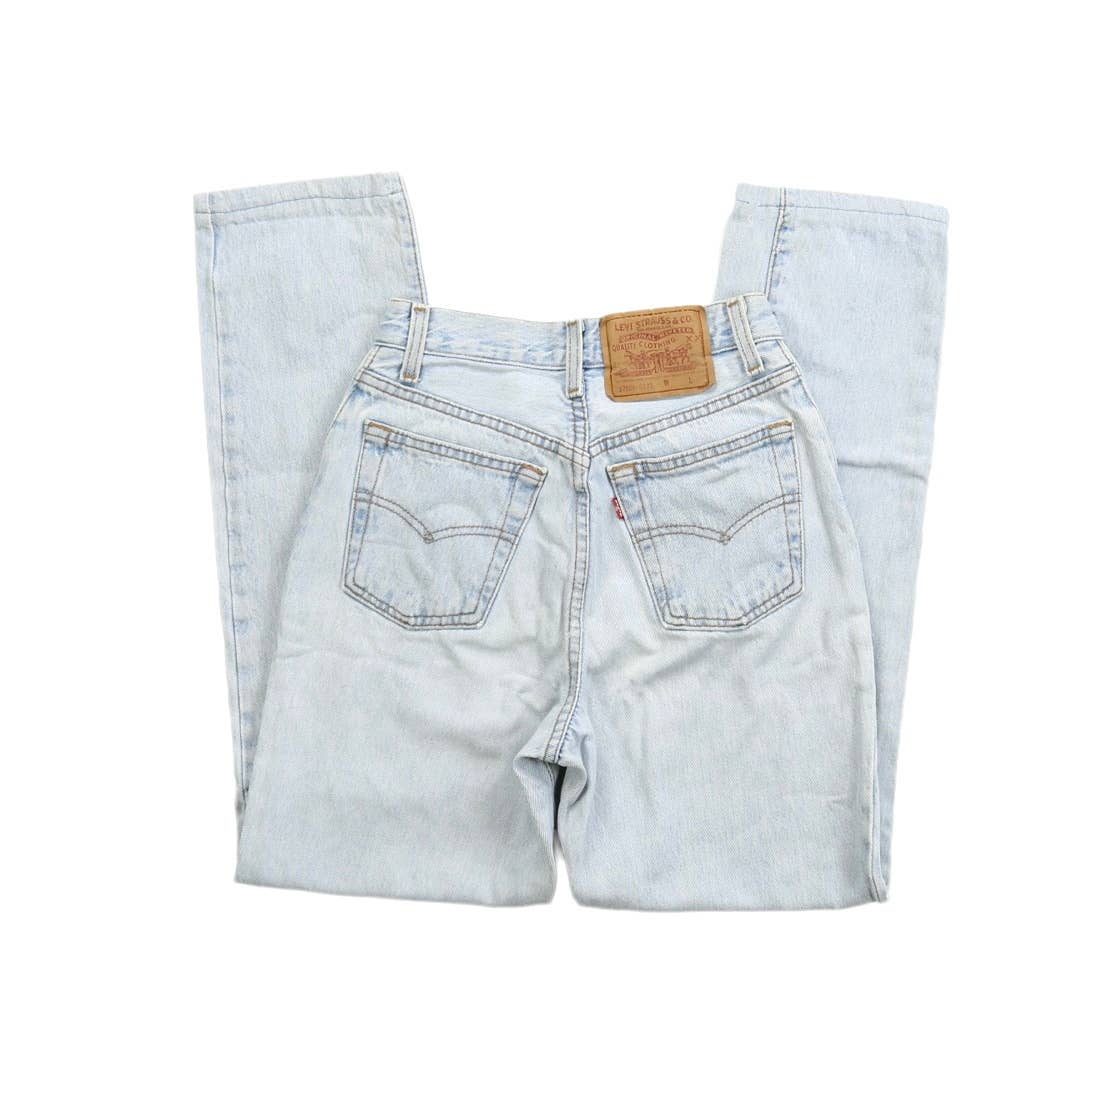 Vintage Levi’s 501 Light Wash High Waisted Jeans 24"/25"